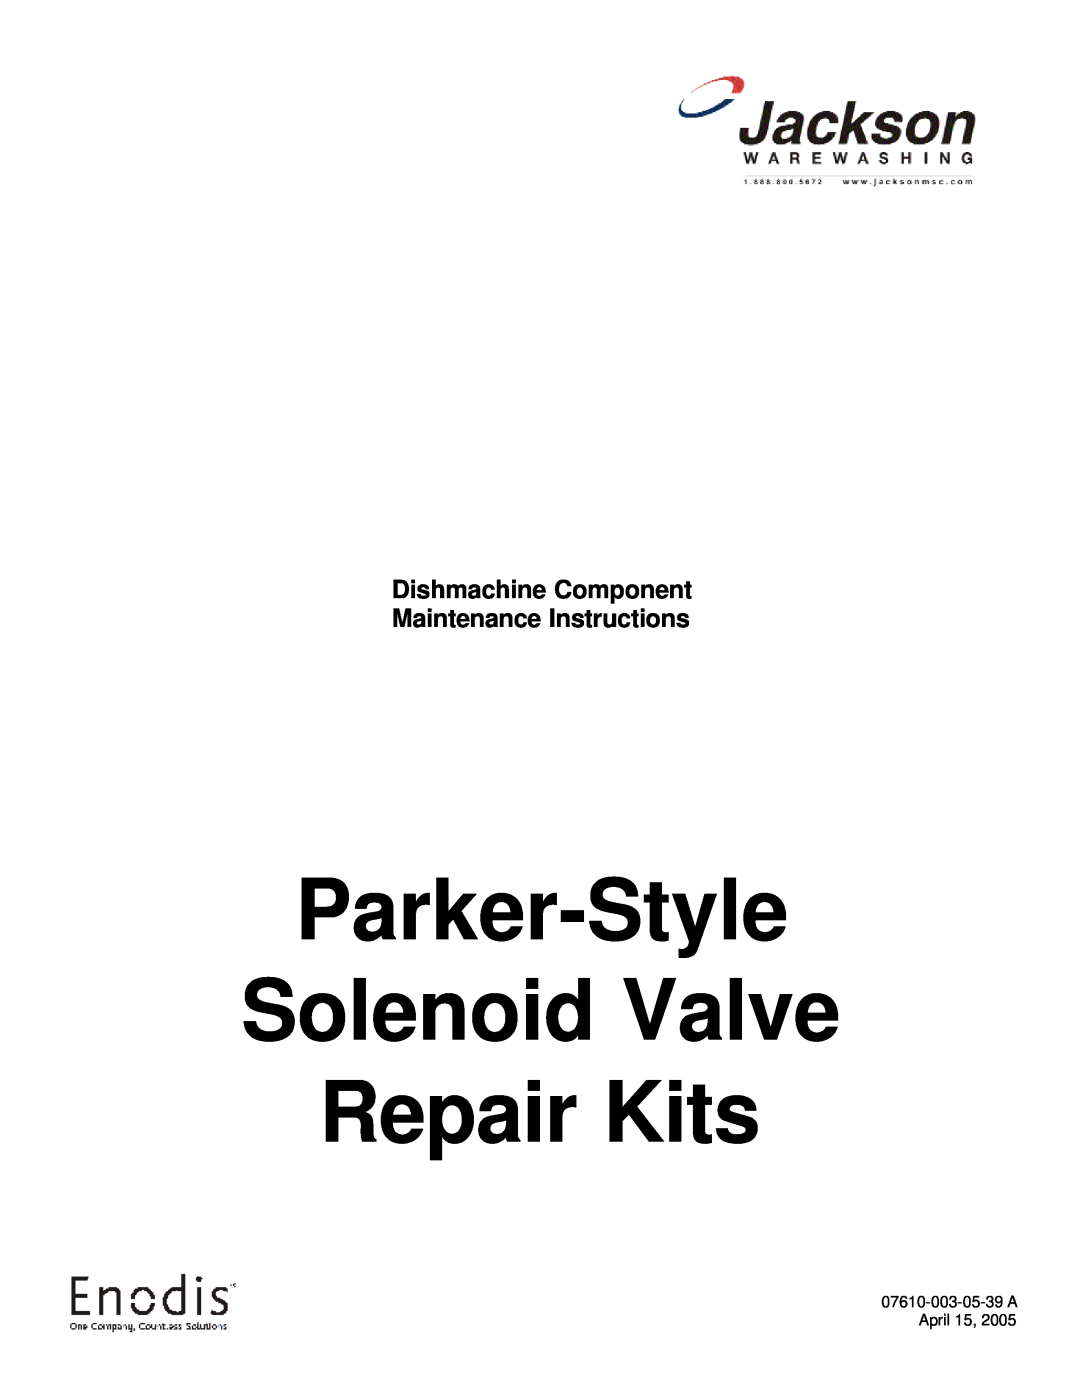 Jackson Dishmachine Component manual Parker-Style Solenoid Valve Repair Kits 